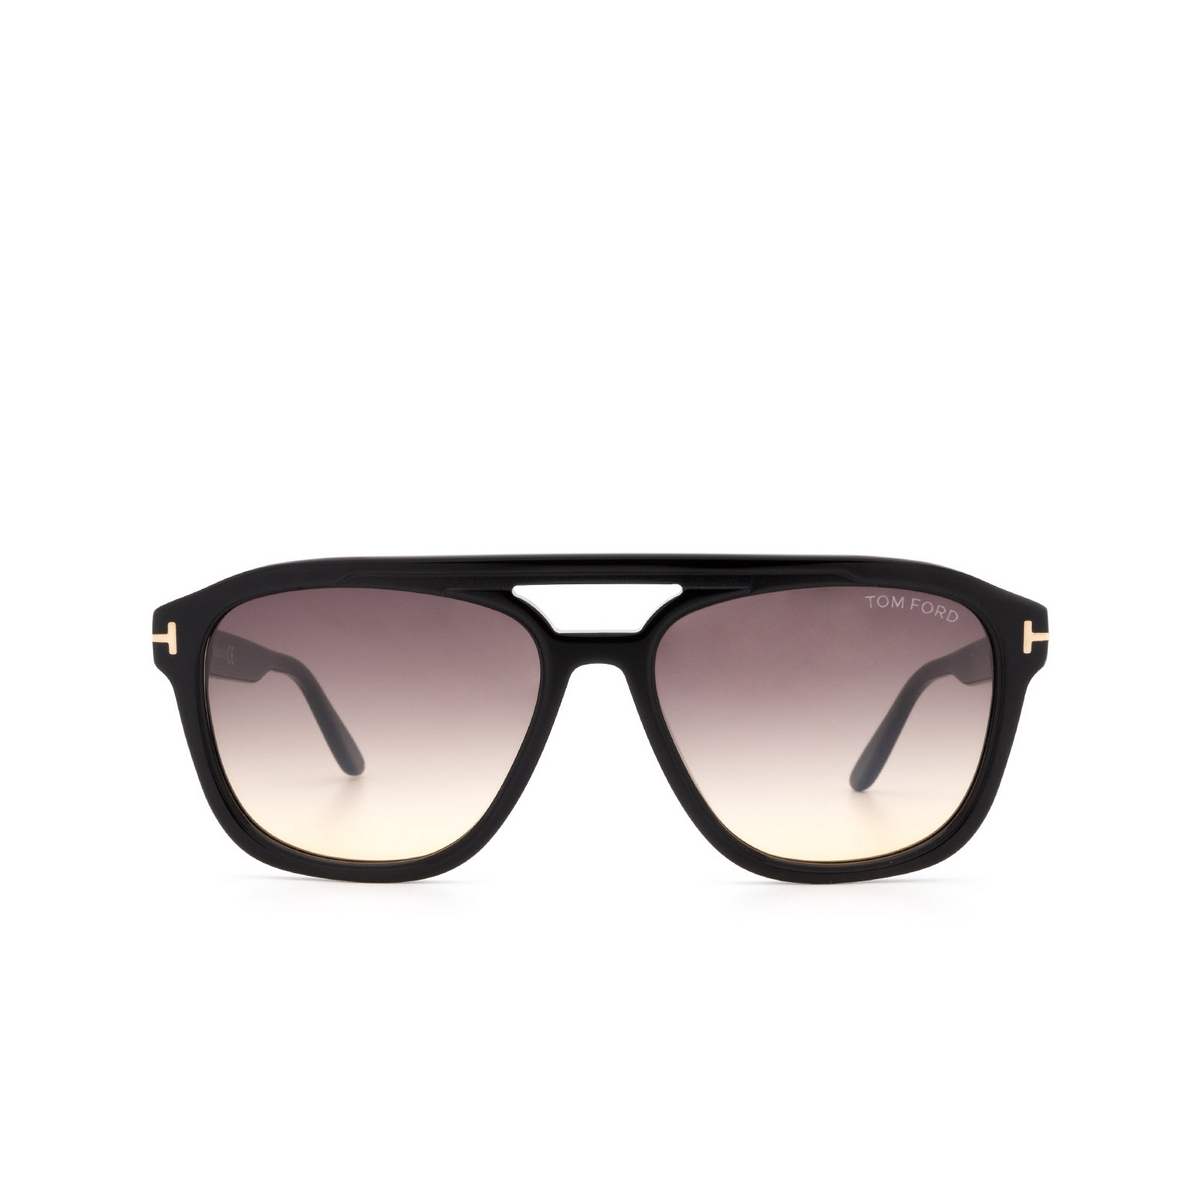 Tom Ford GERRARD Sunglasses 01B Matte Black - front view